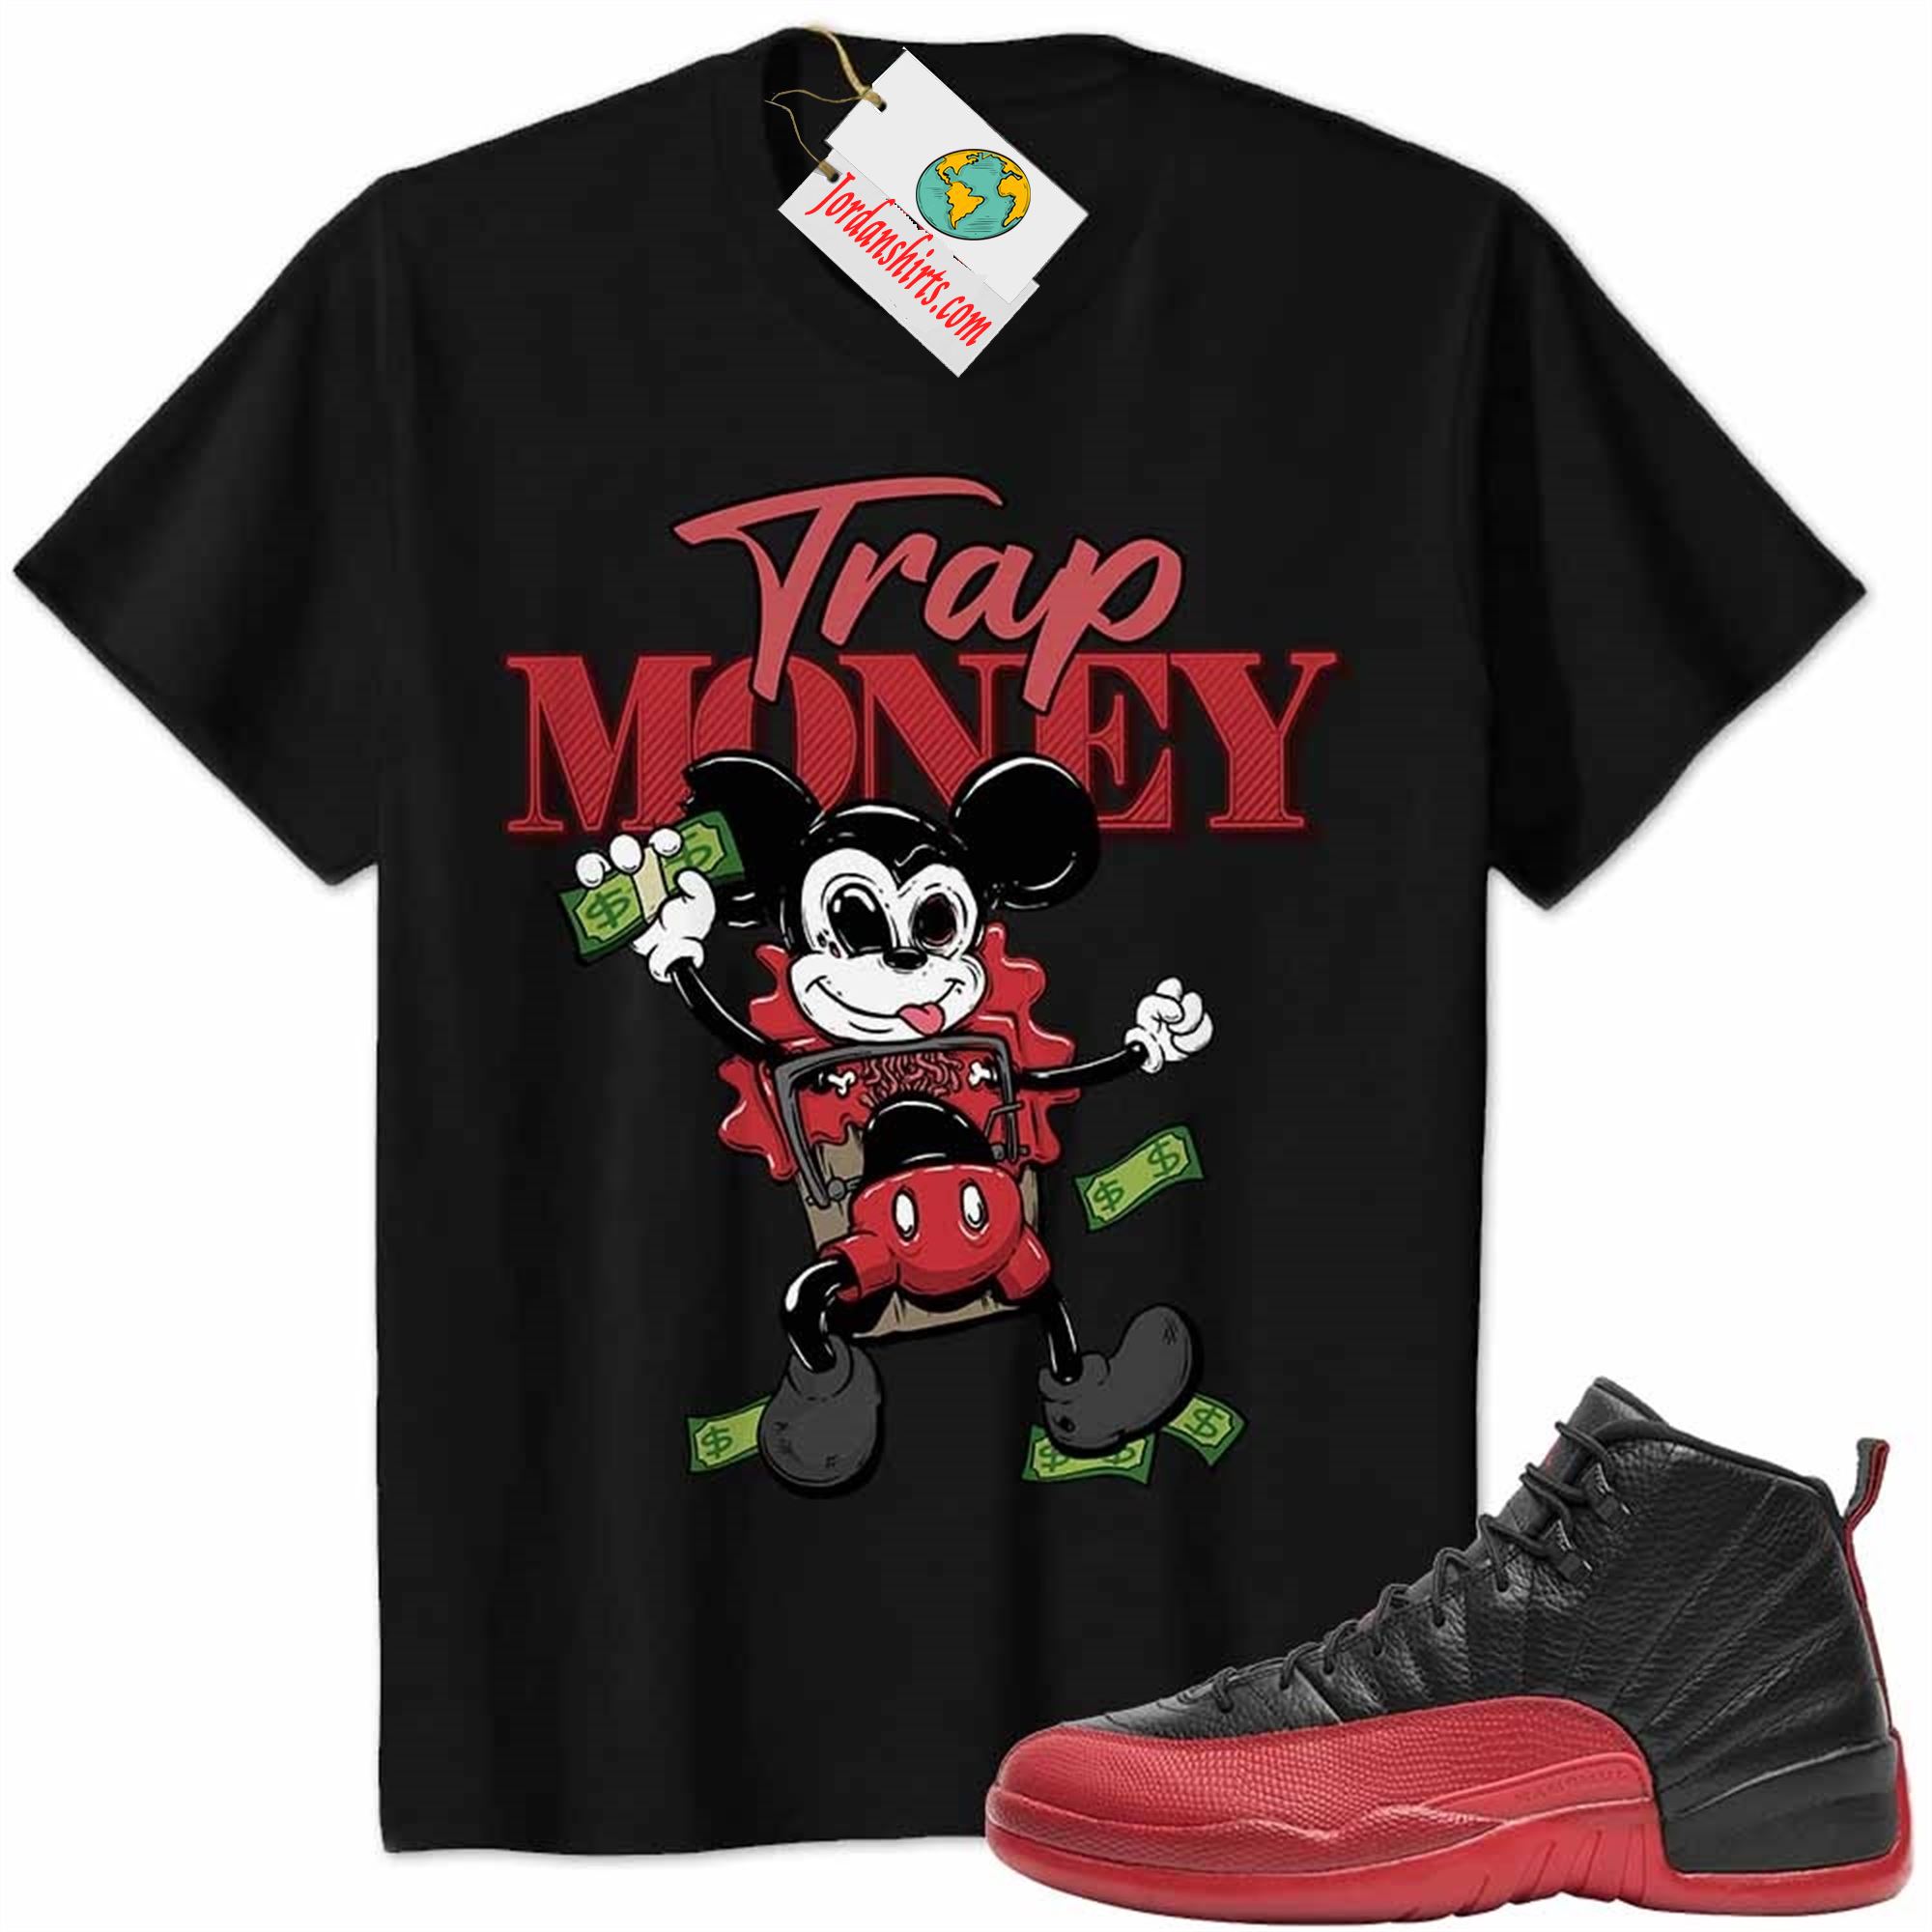 Jordan 12 Shirt, Mickey Horror Trap Money Black Air Jordan 12 Flu Game 12s Size Up To 5xl